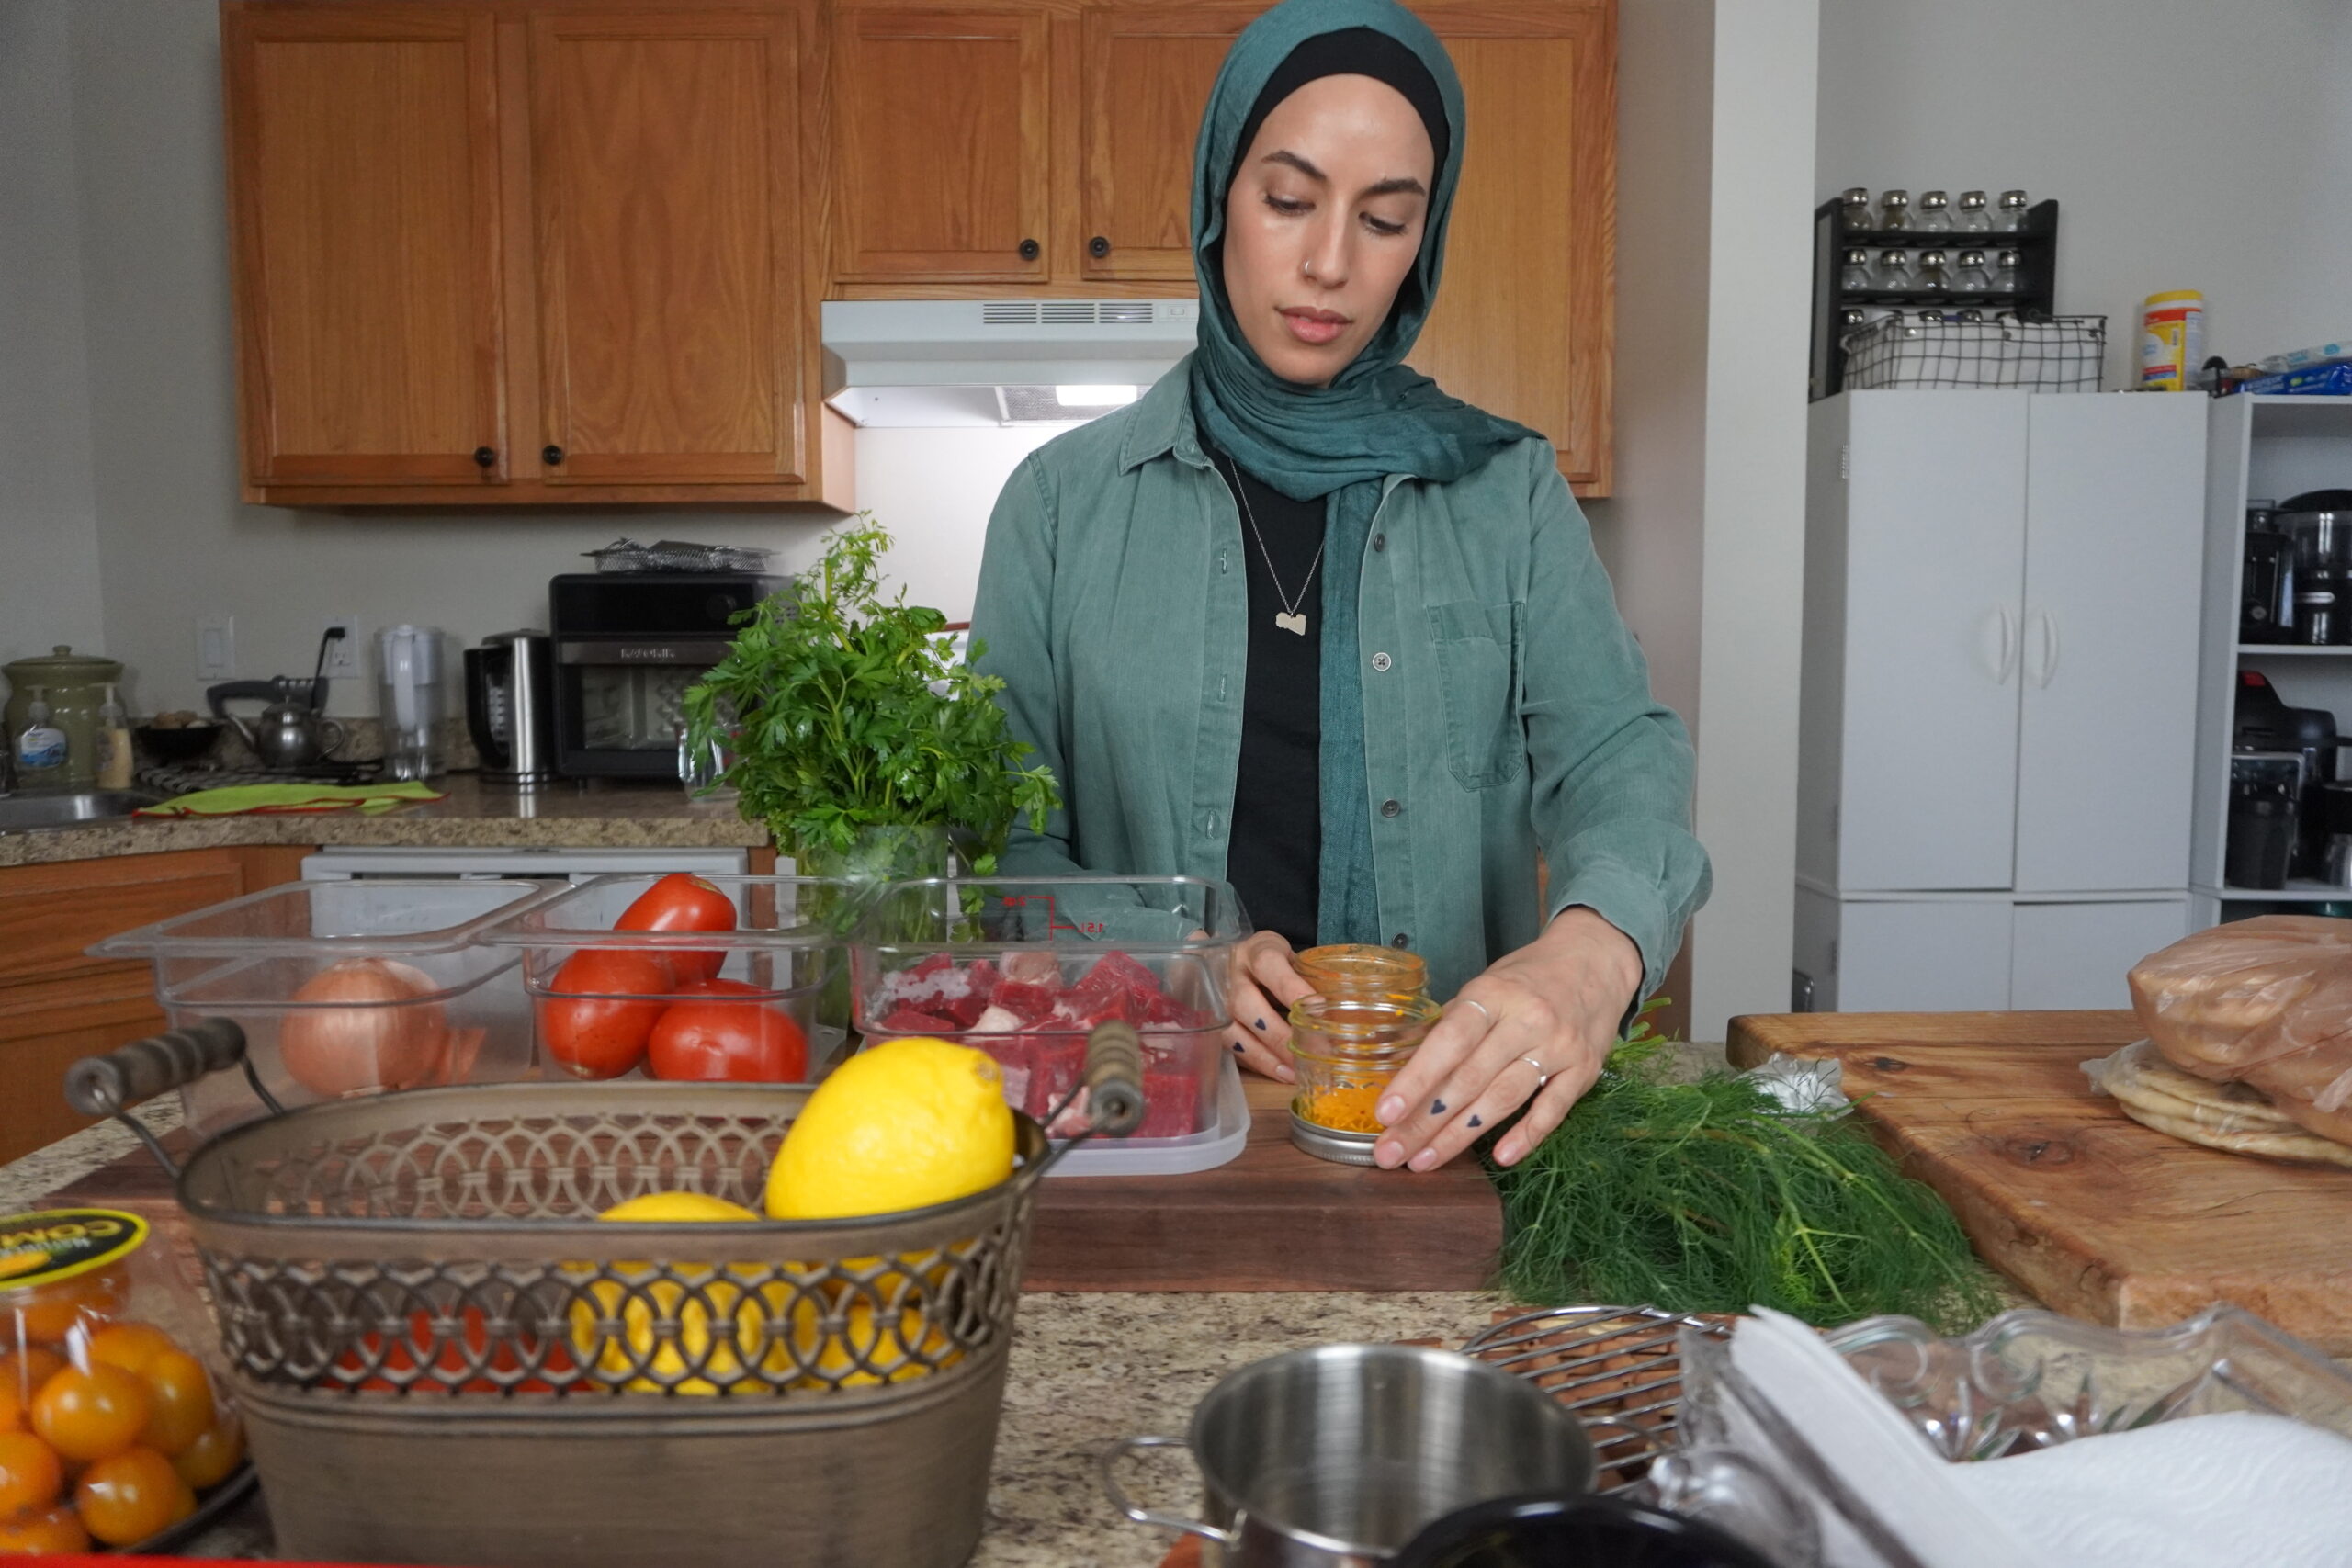 Zainab Hassen prepares ingredients to make Mbakbaka in her home kitchen in Stoughton, Wis.